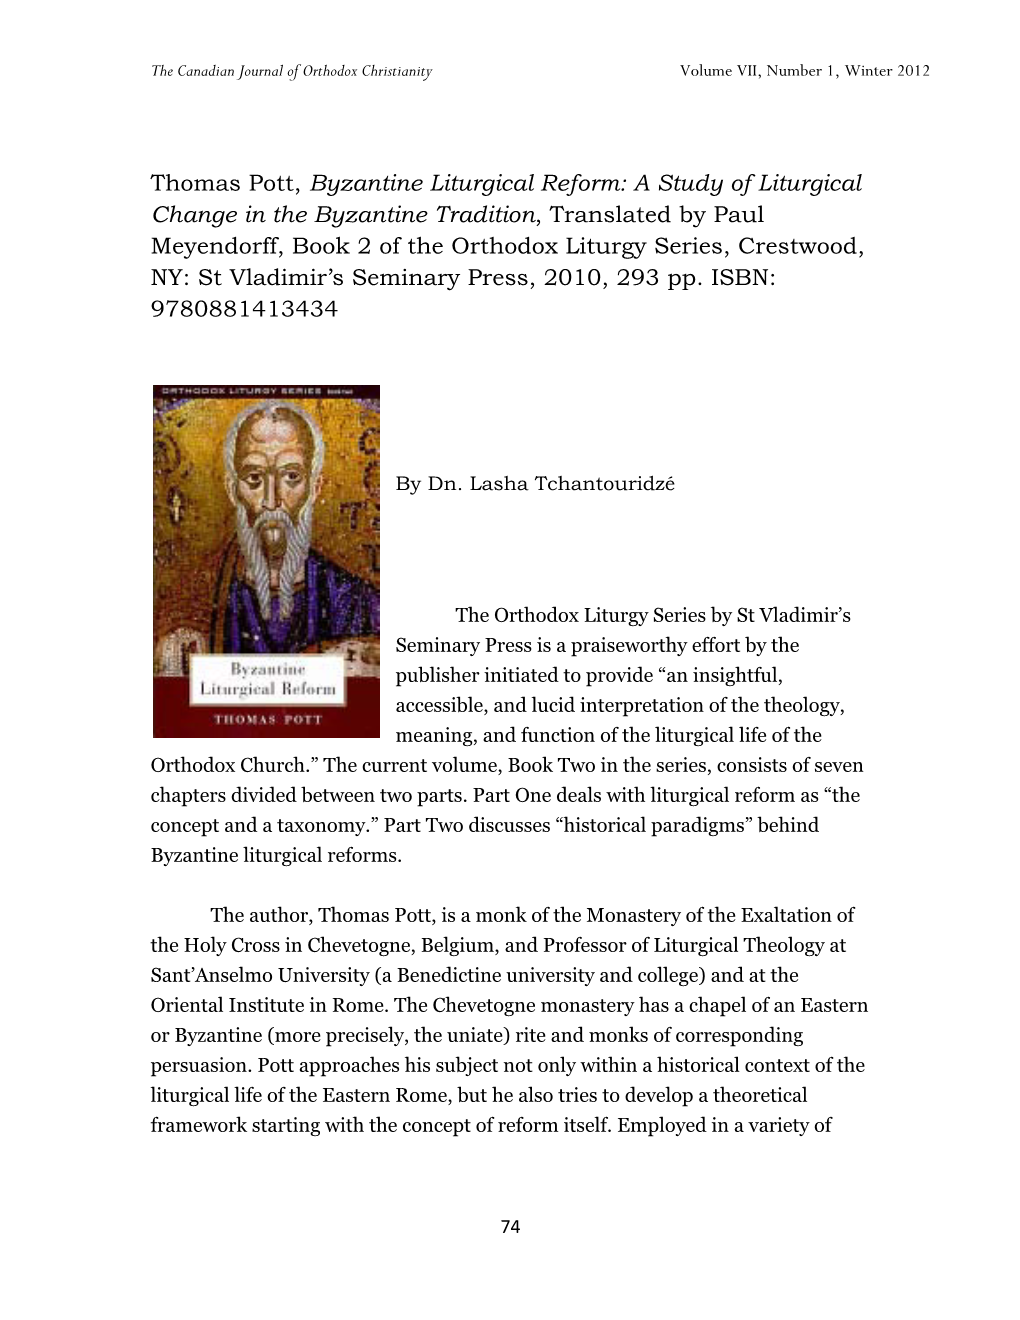 Thomas Pott, Byzantine Liturgical Reform